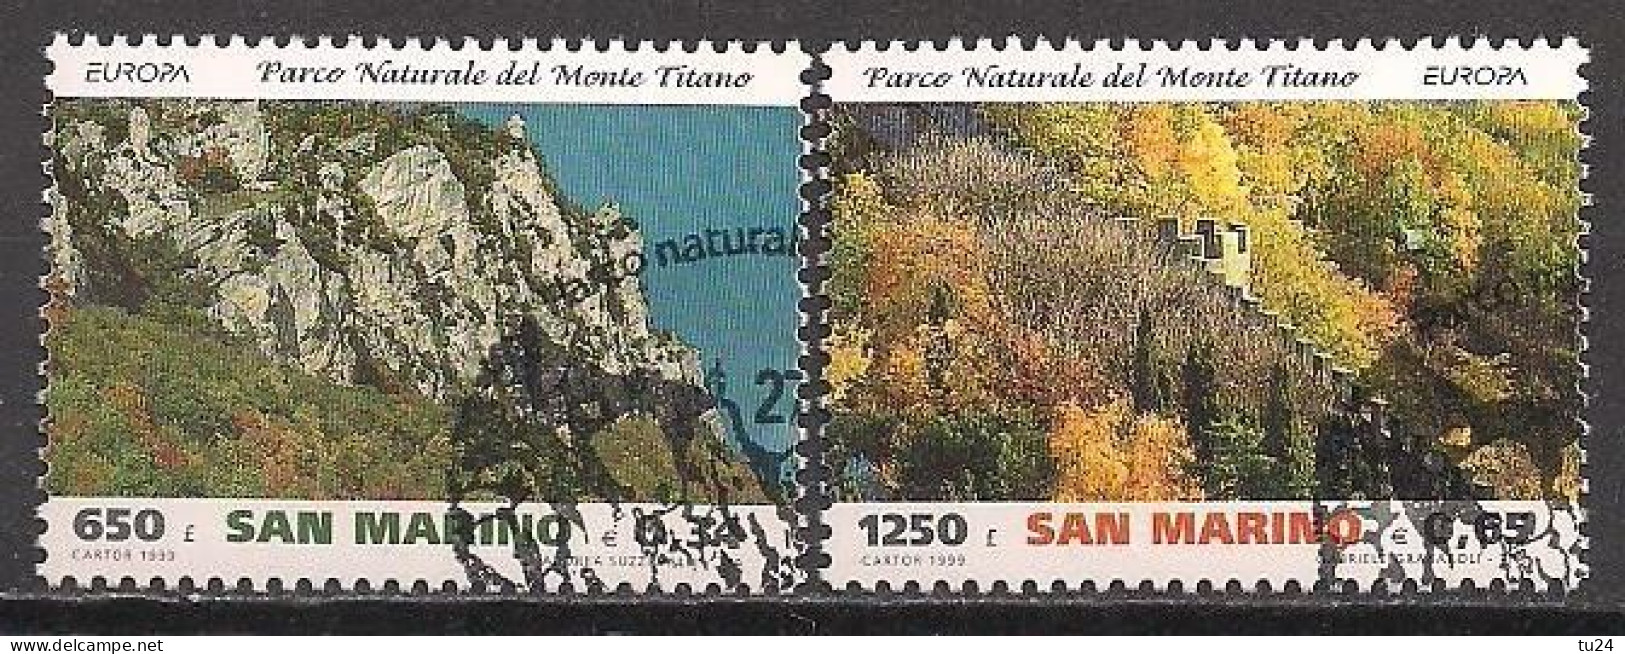 San Marino  (1999)  Mi.Nr.  1832 + 1833  Gest. / Used  (3he10)  EUROPA - 1999